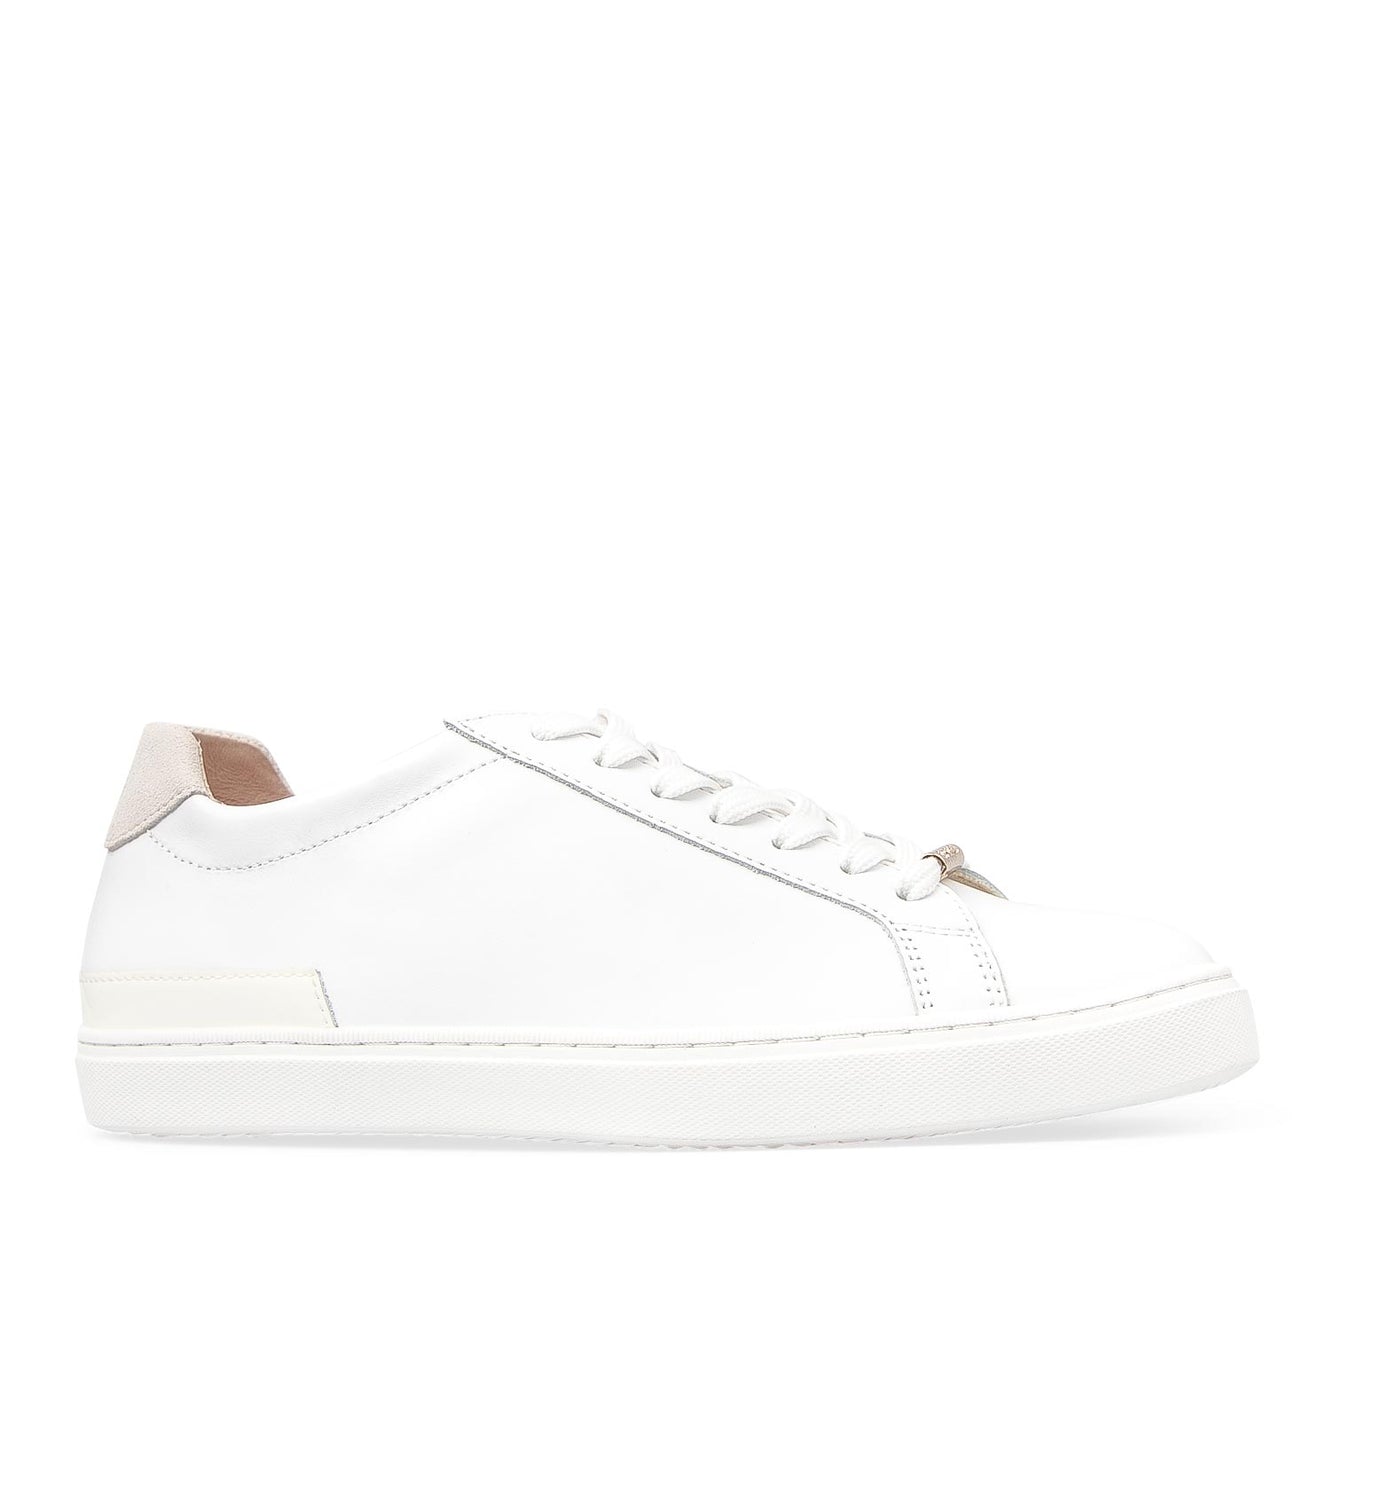 Hornbill White Leather Sneakers | Bared Footwear